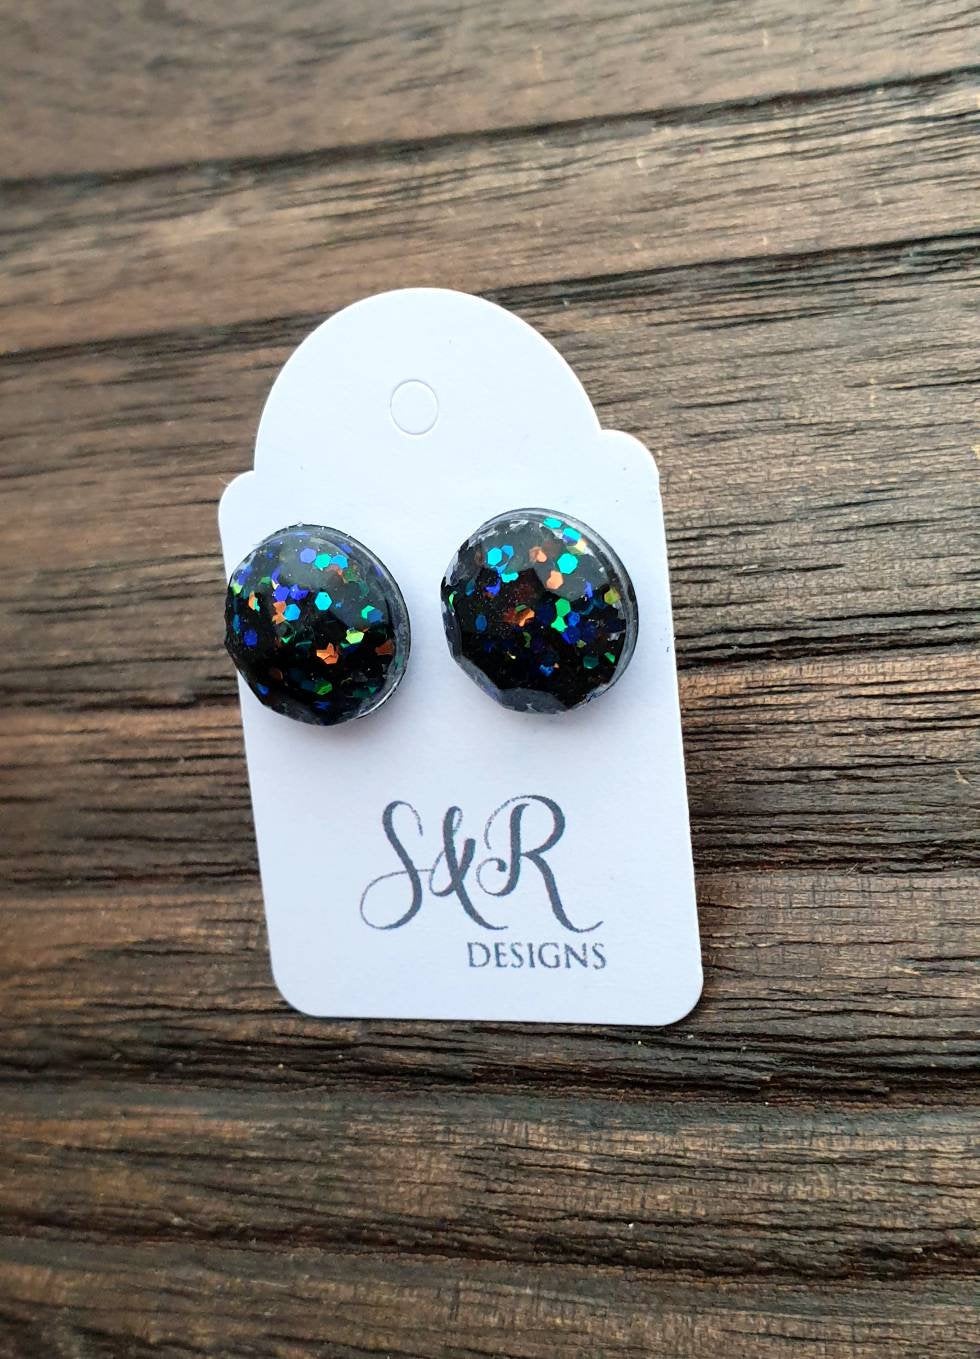 Faceted Circle Resin Stud Earrings, Black Rainbow Glitter Mix Stainless Steel Stud Earrings. 12mm